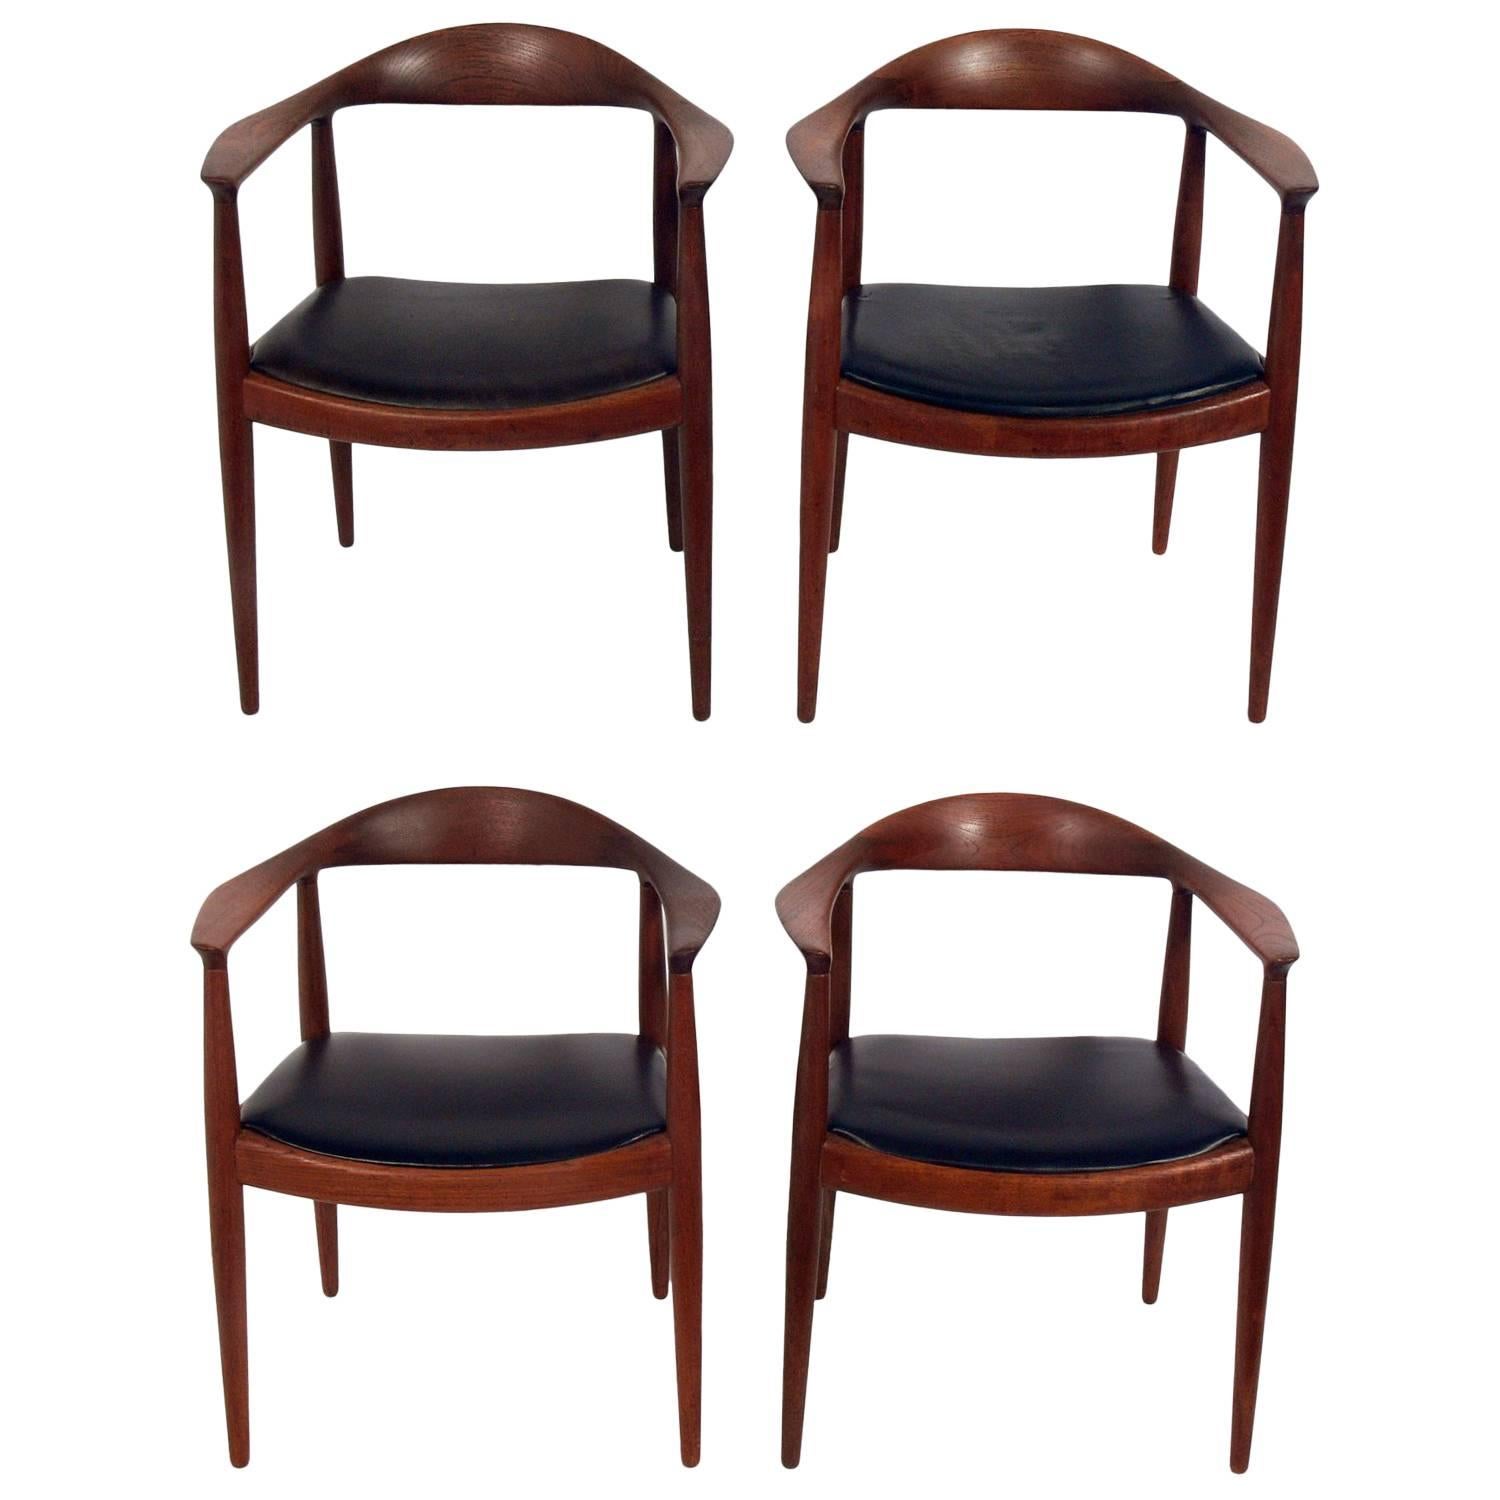 Set of Four "The Chairs" by Hans Wegner for Johannes Hansen